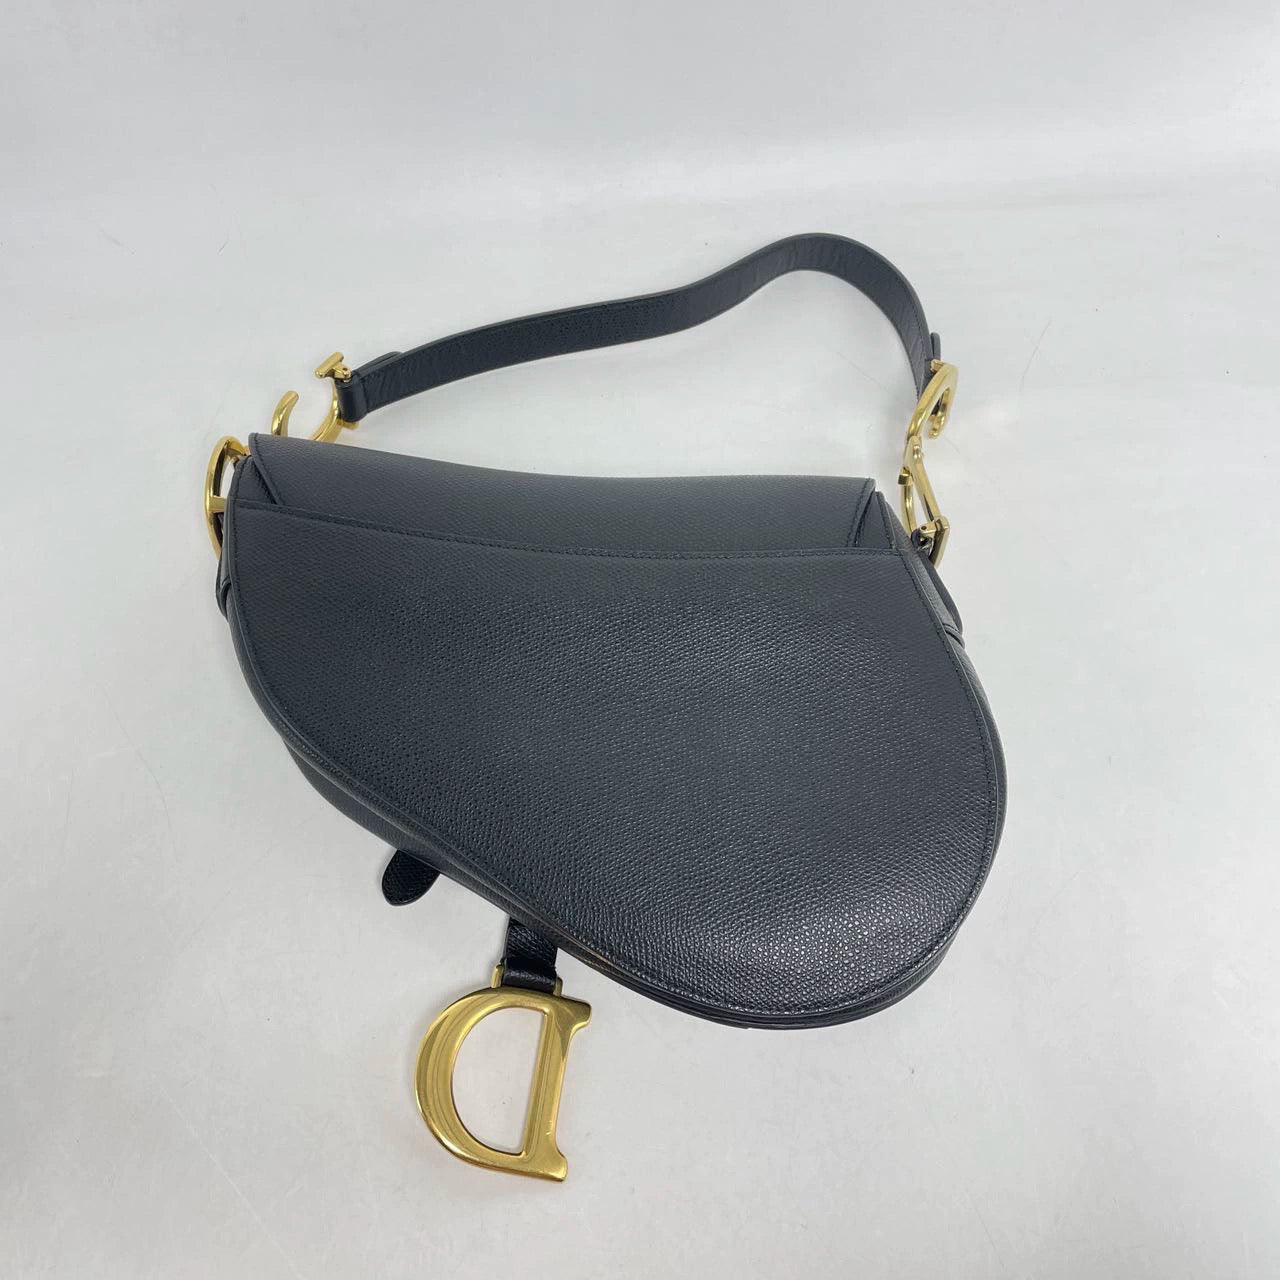 Dior Saddle Black Medium Grained Leather Handbag with Gold Hardware with Strap